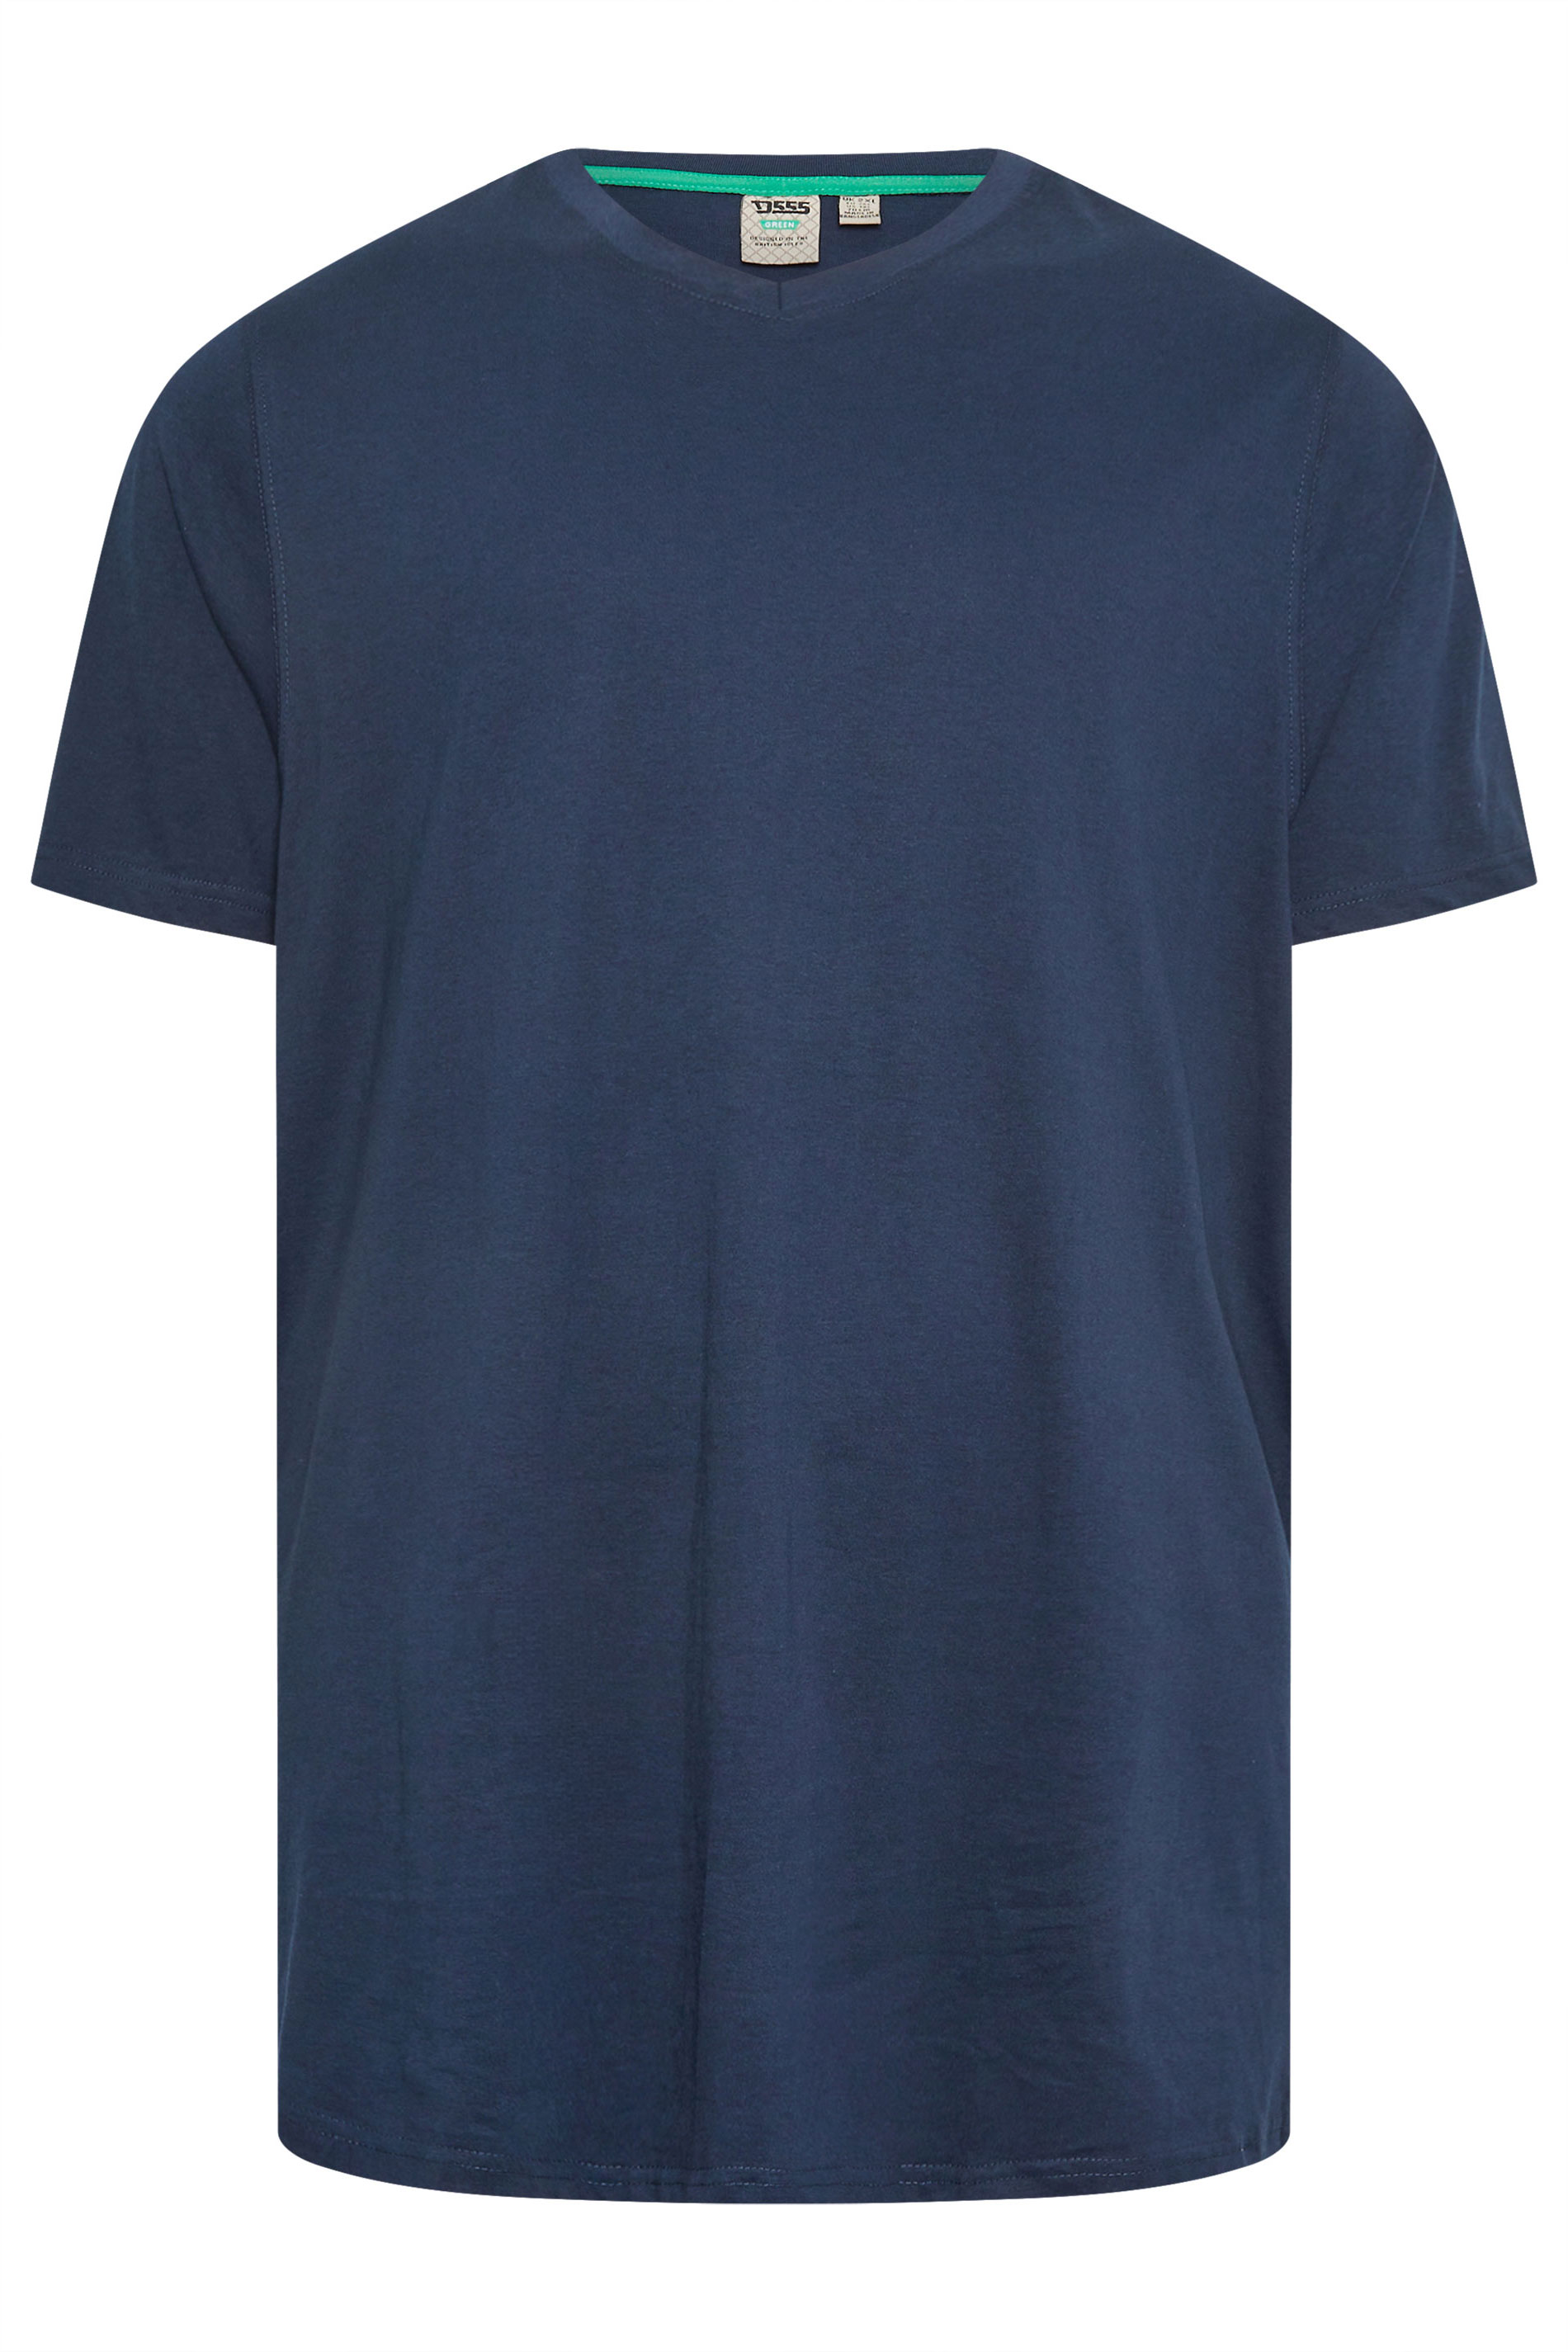 D555 Big & Tall Navy Blue Short Sleeve T-Shirt | BadRhino 2